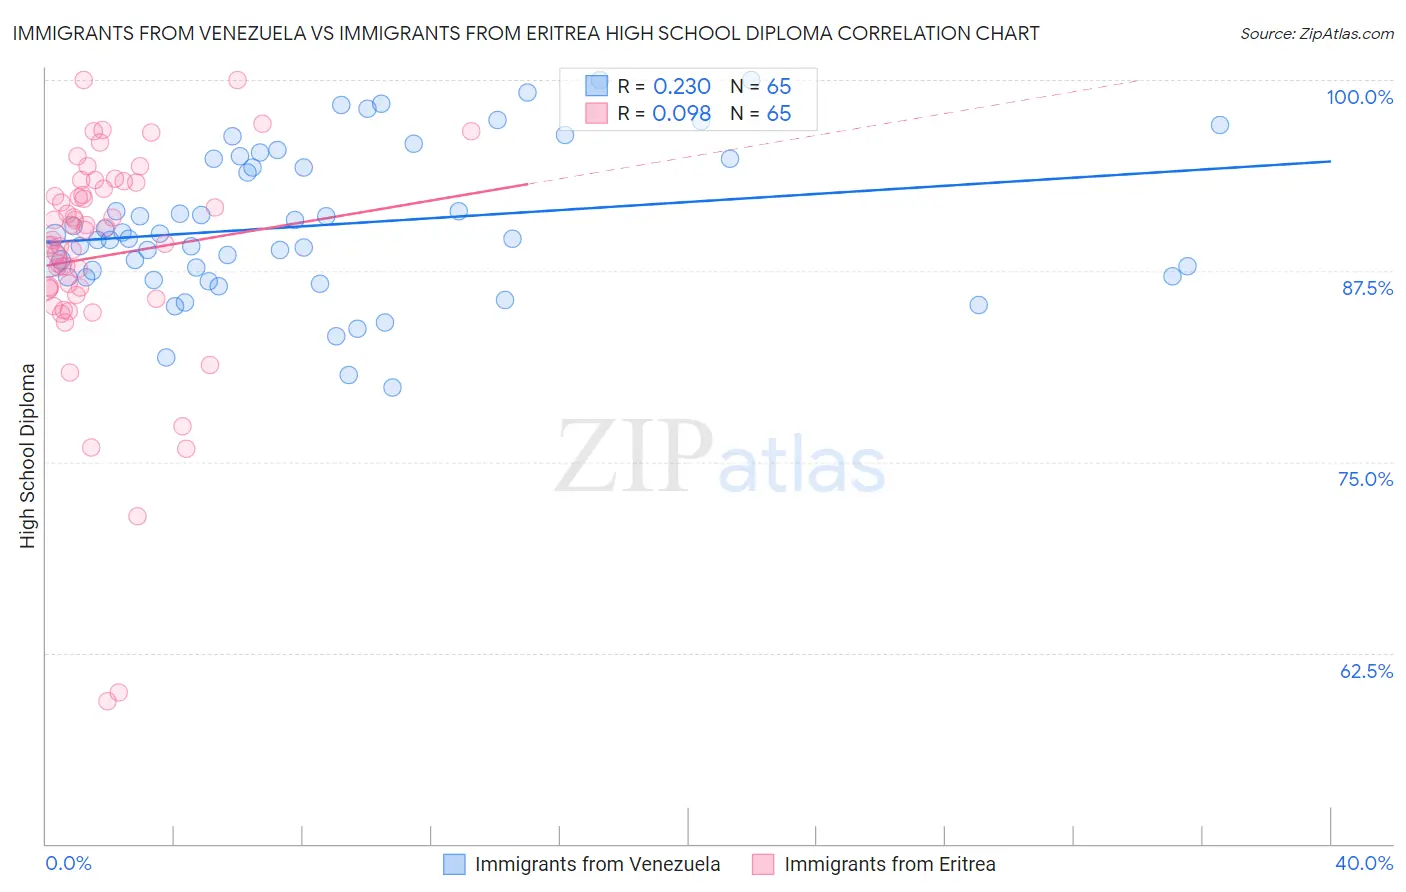 Immigrants from Venezuela vs Immigrants from Eritrea High School Diploma